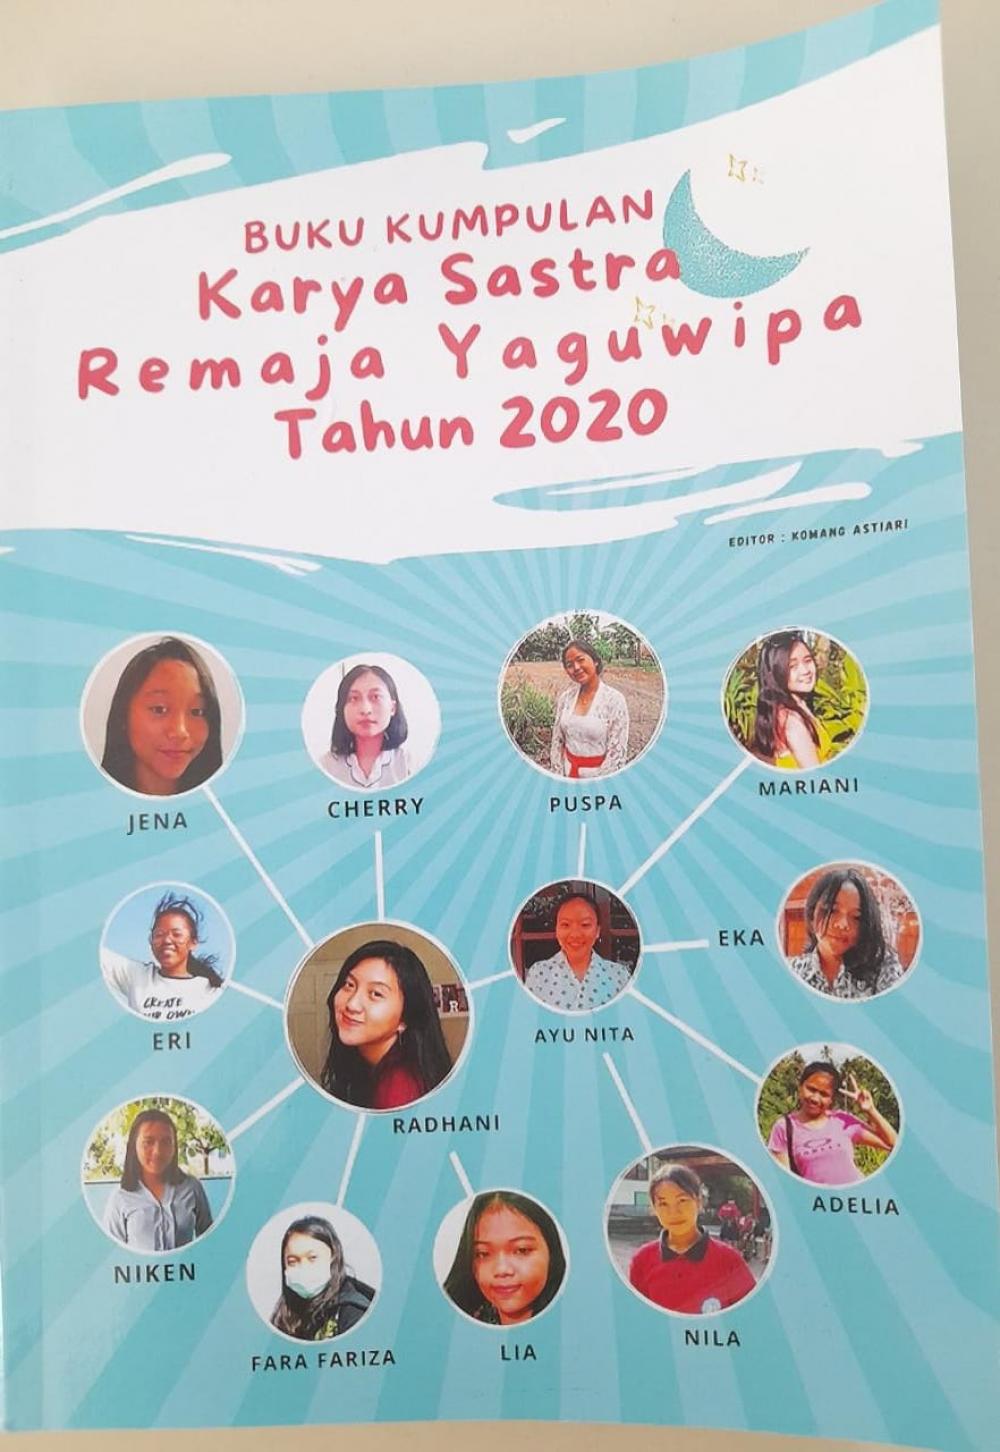 Buku Kumpulan Karya Sastra Remaja Yaguwipa Tahun 2020